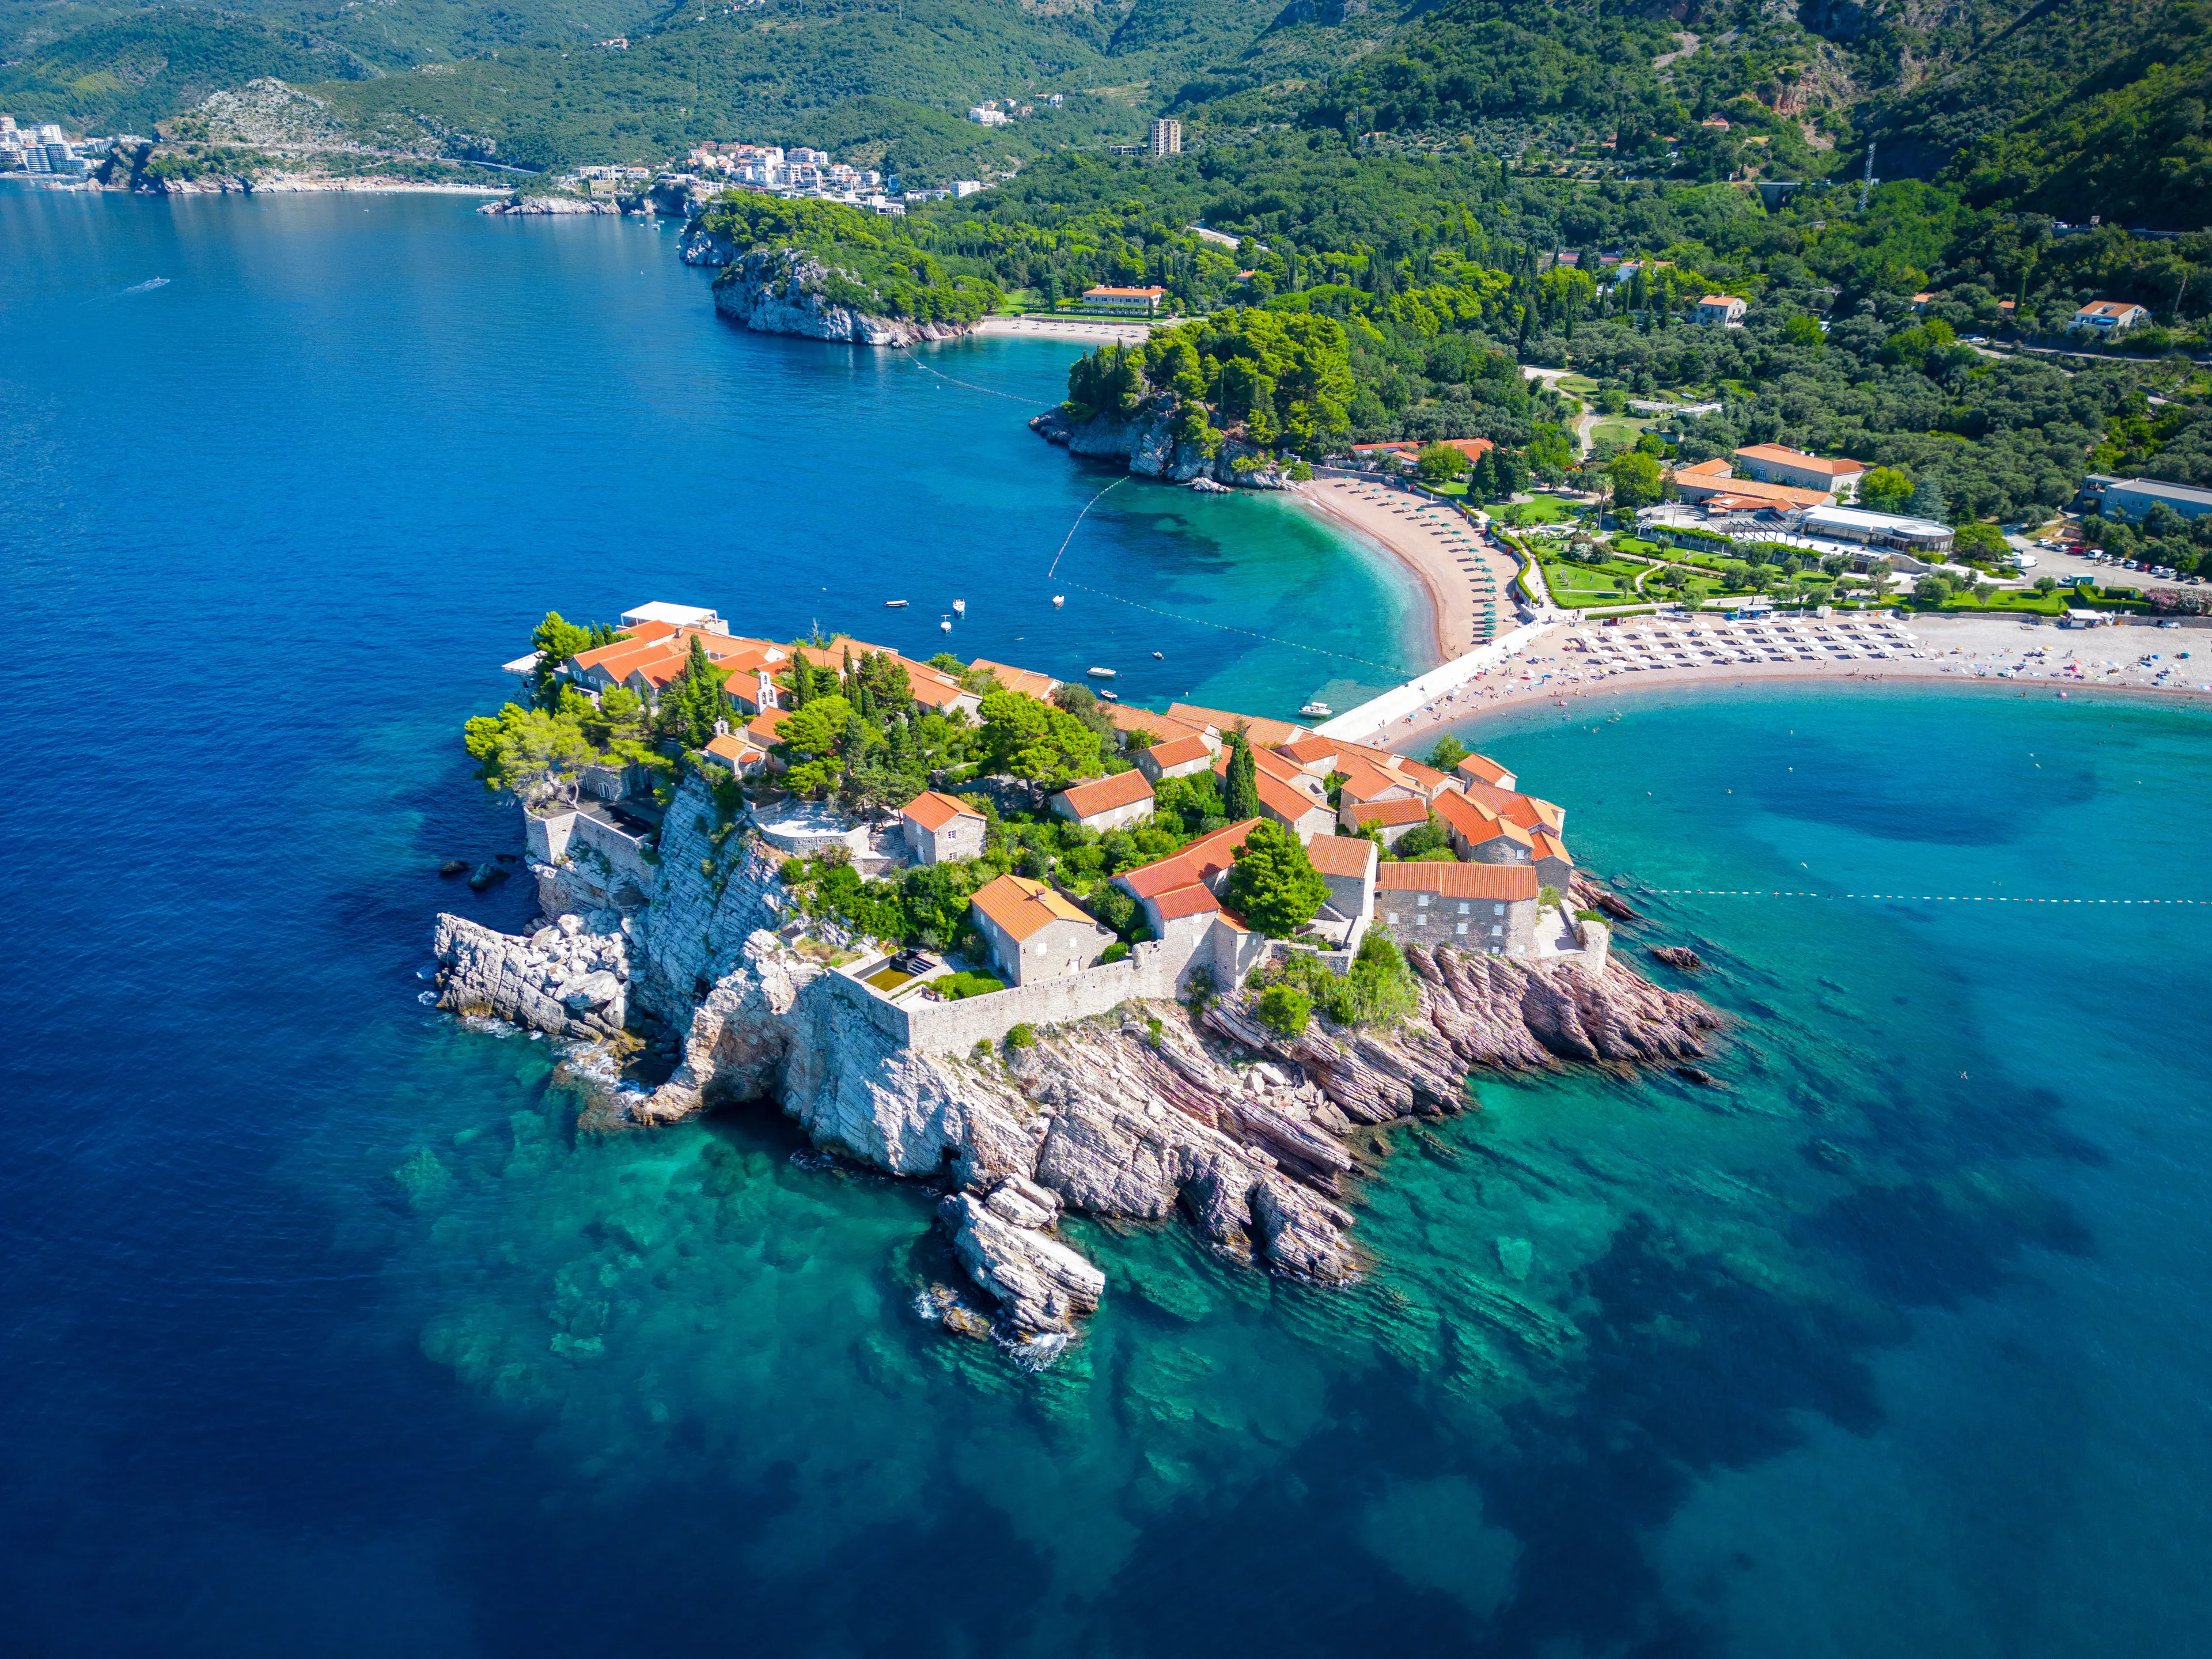 Island of Sveti Stefan, eaches and coastline of the Adriatic Sea